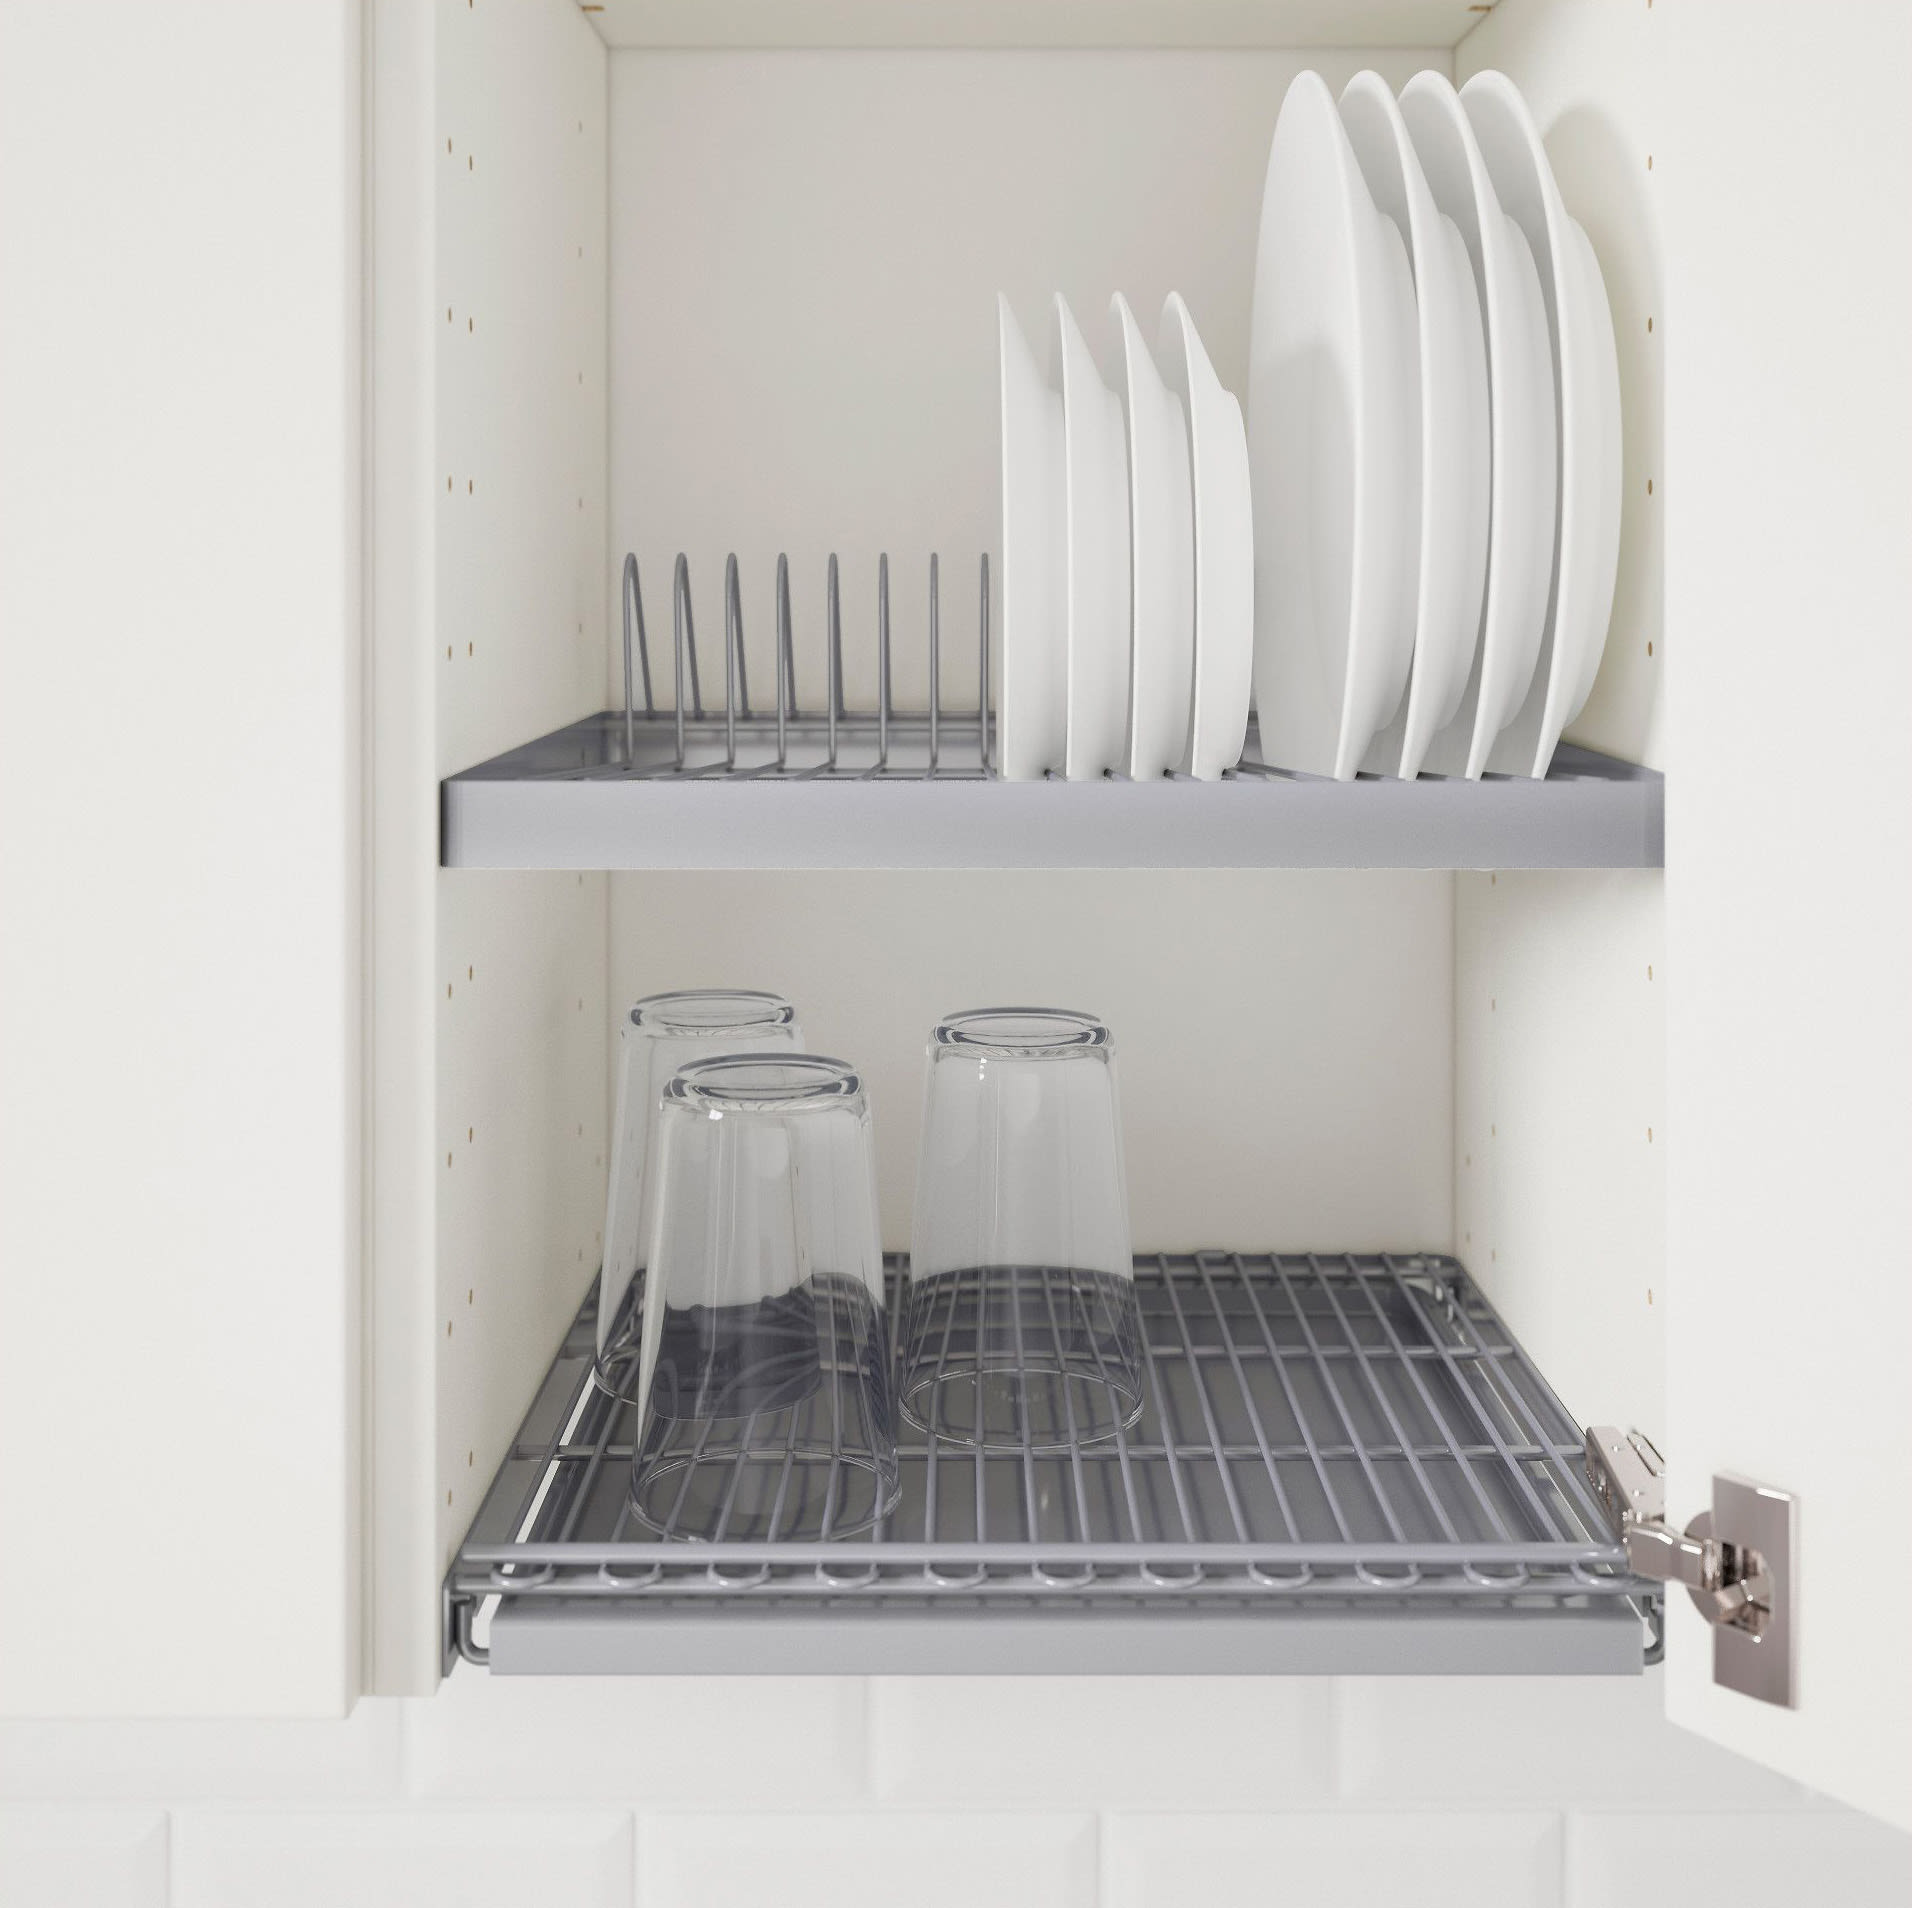 Drying Racks Above Sink Inside Kitchen Cabinet. Hidden Cabinet -   Finland